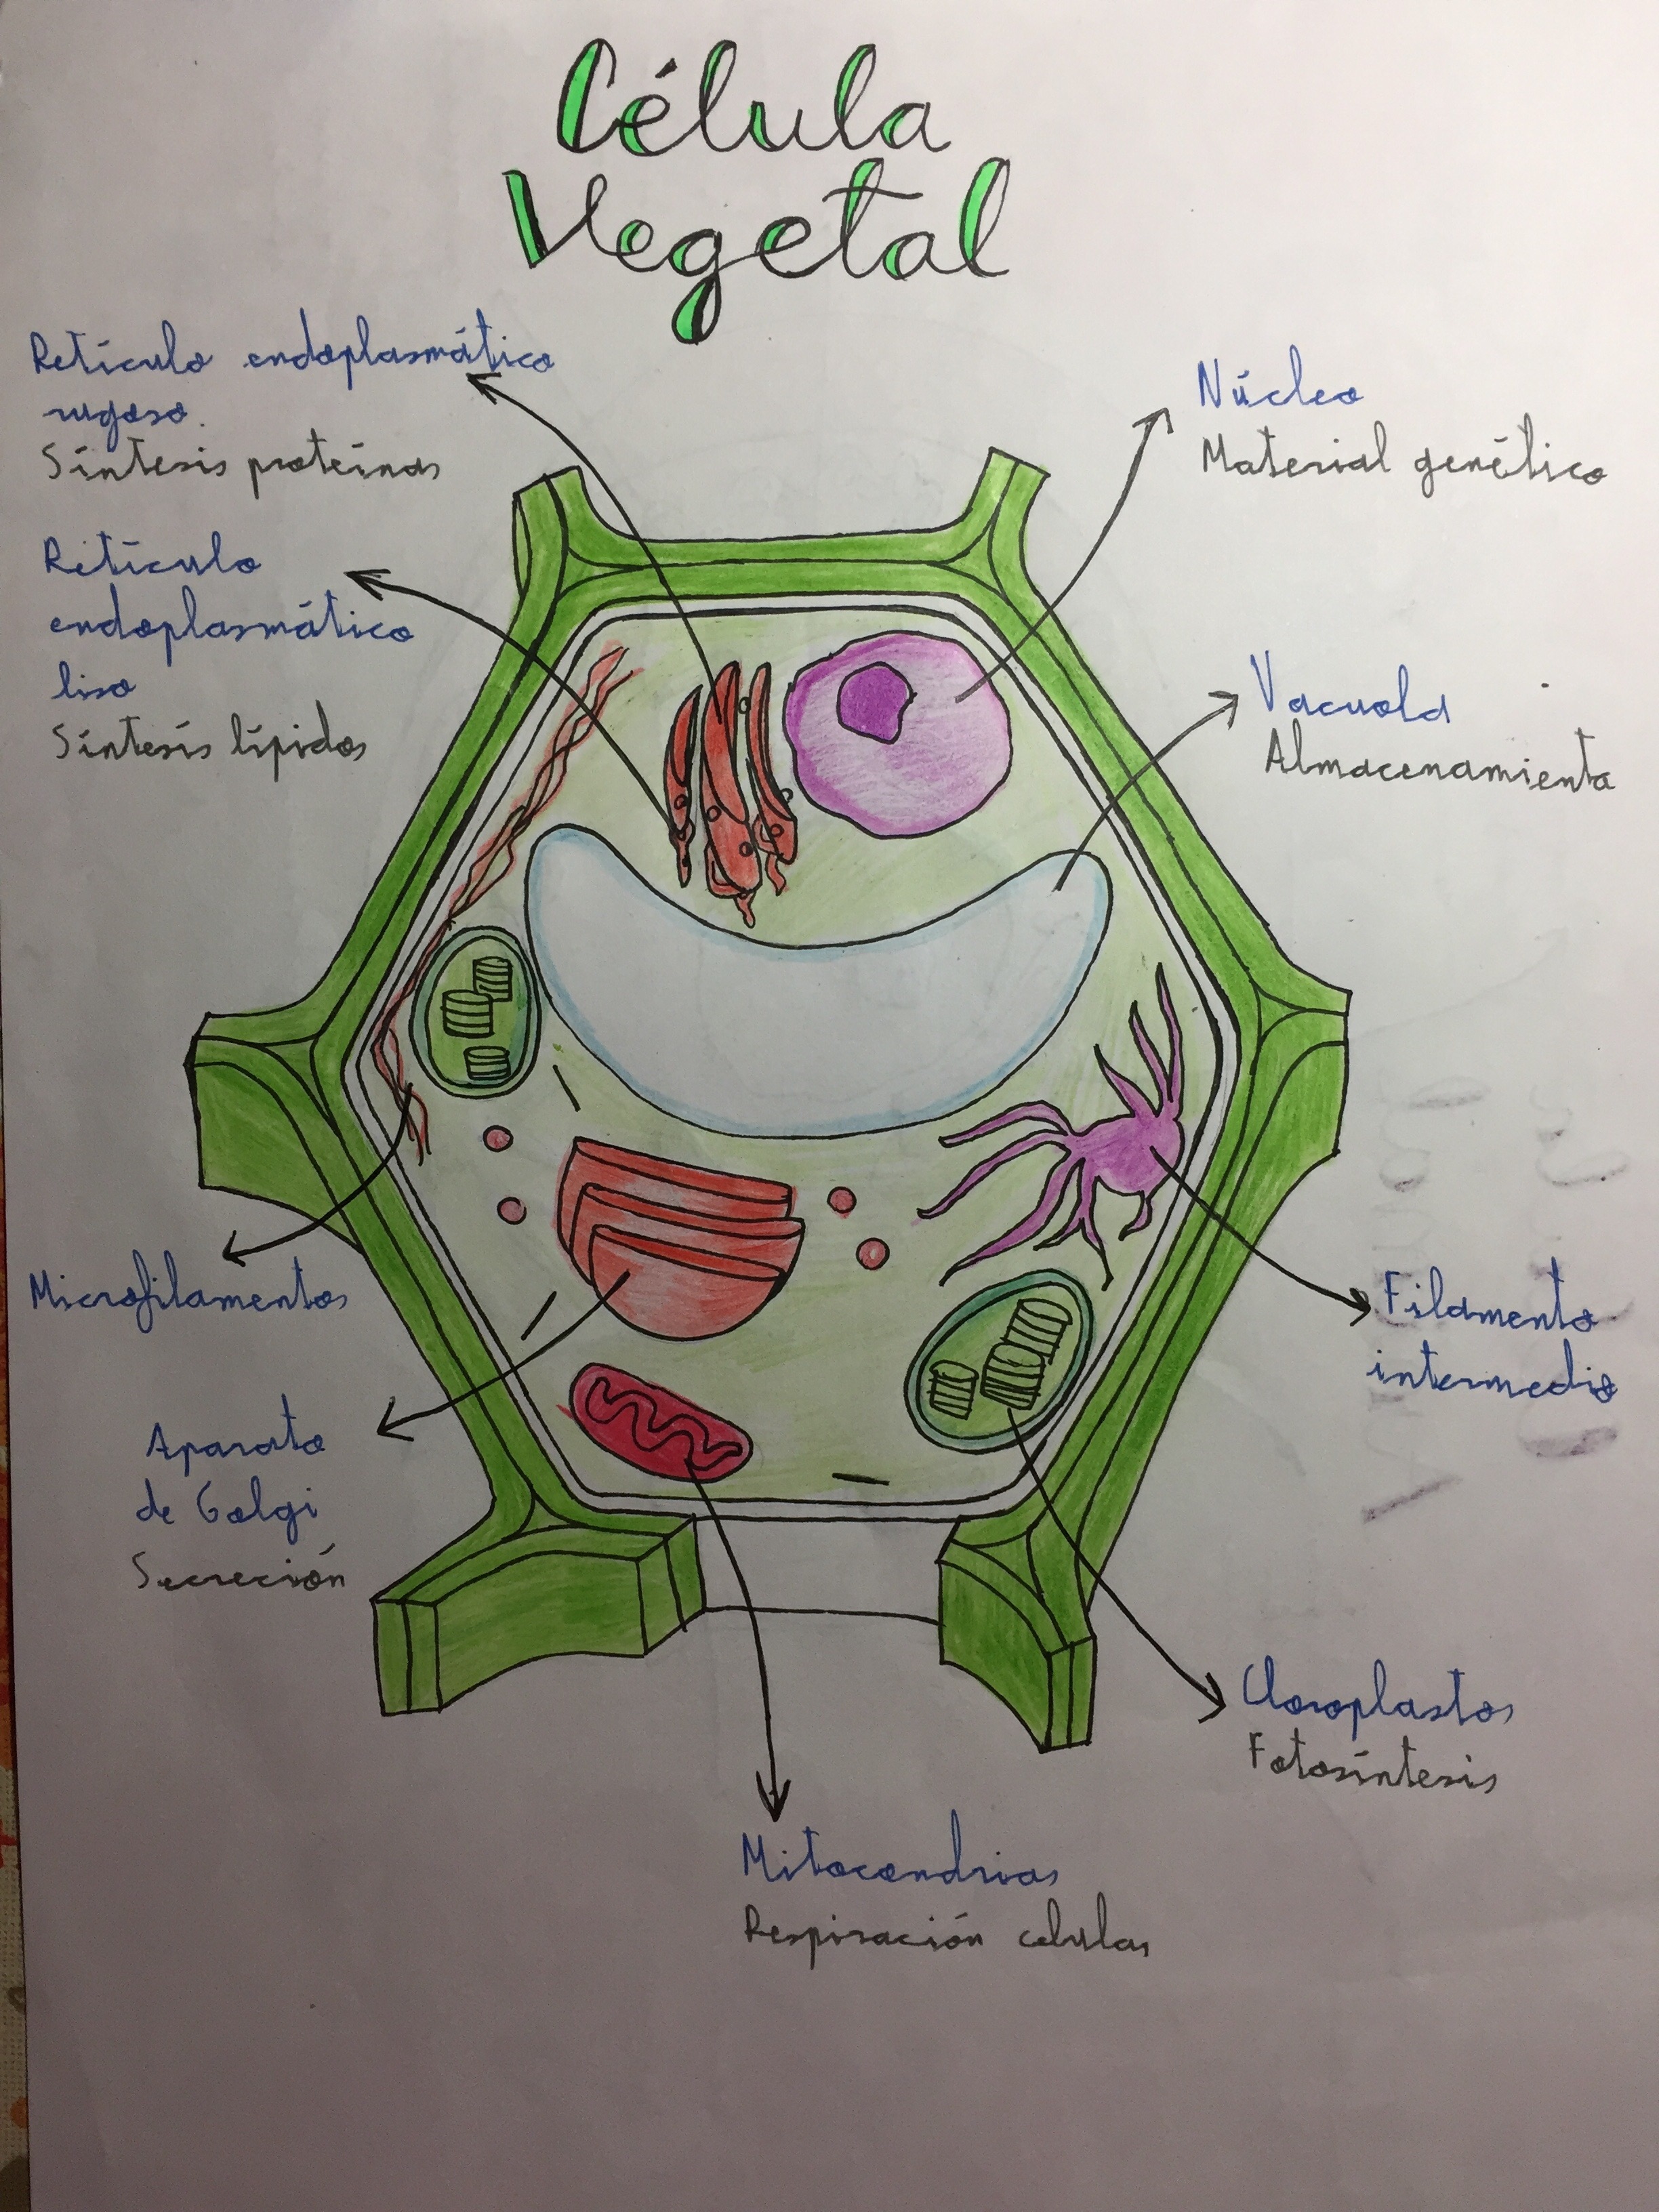 Célula vegetal y célula animal (eucariotas) – BiololoBlog